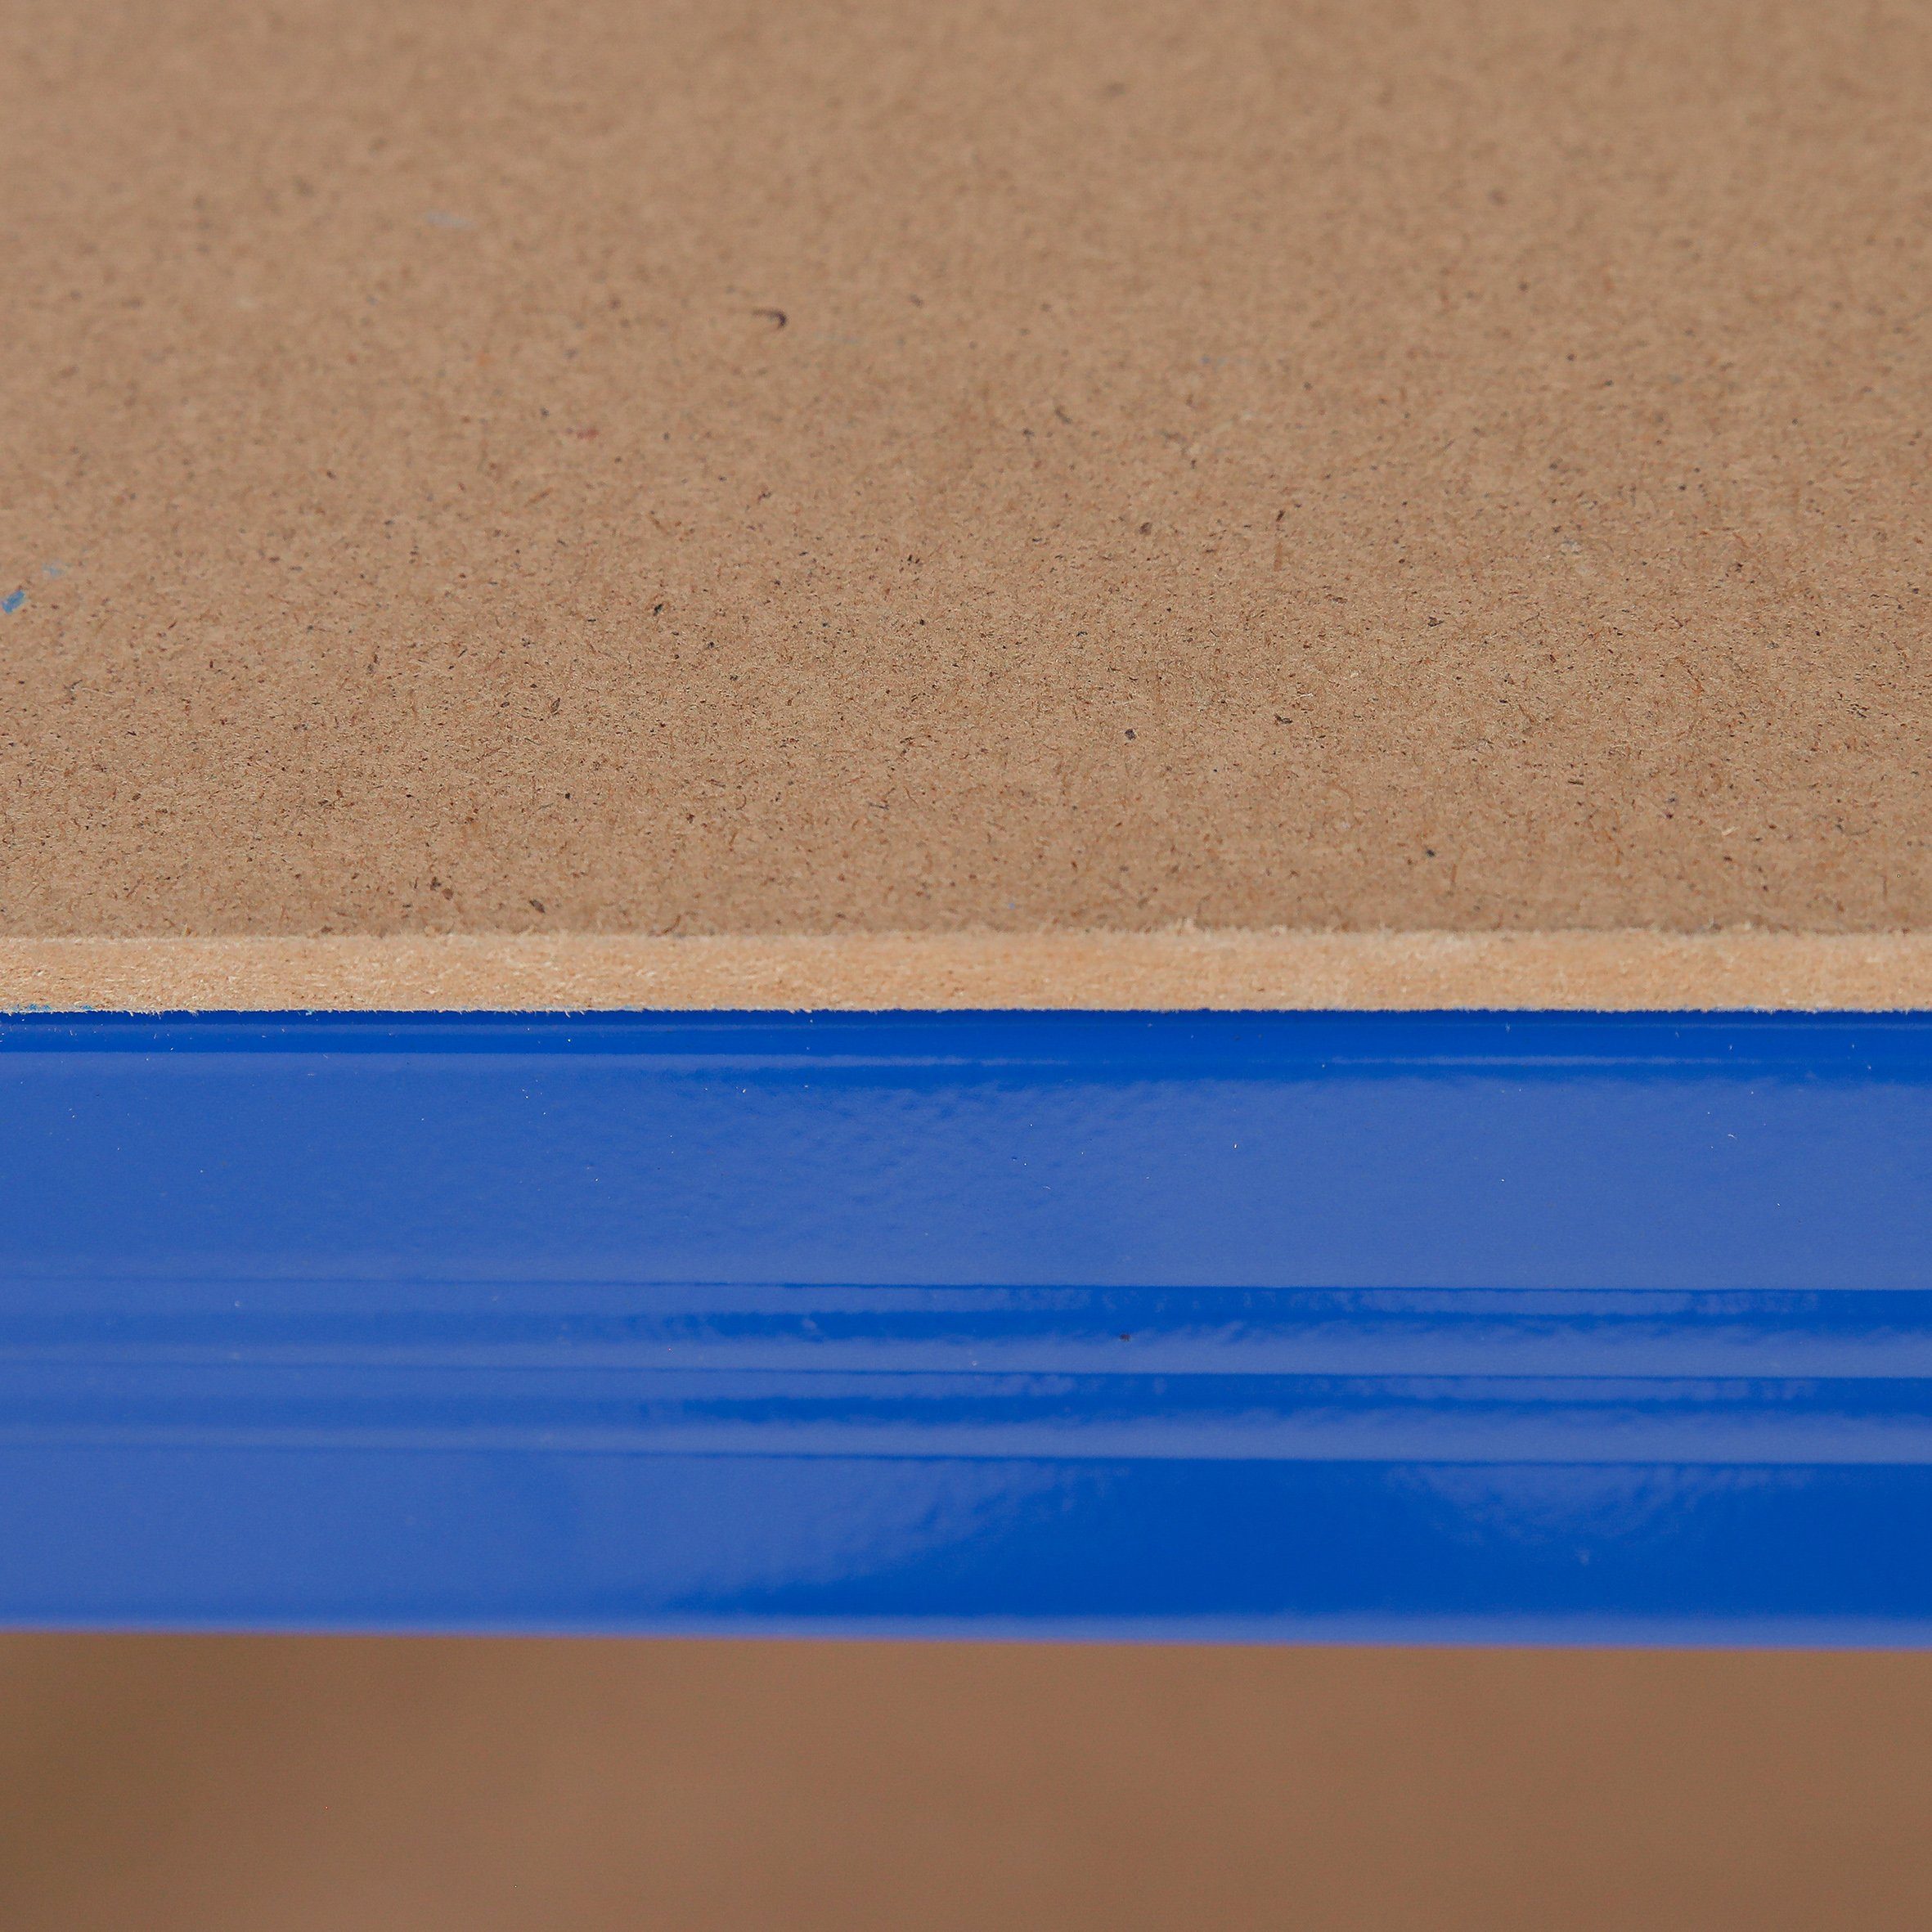 ca. Standregal Schwerlastregal, cm blau, 180x90x60 Ribelli